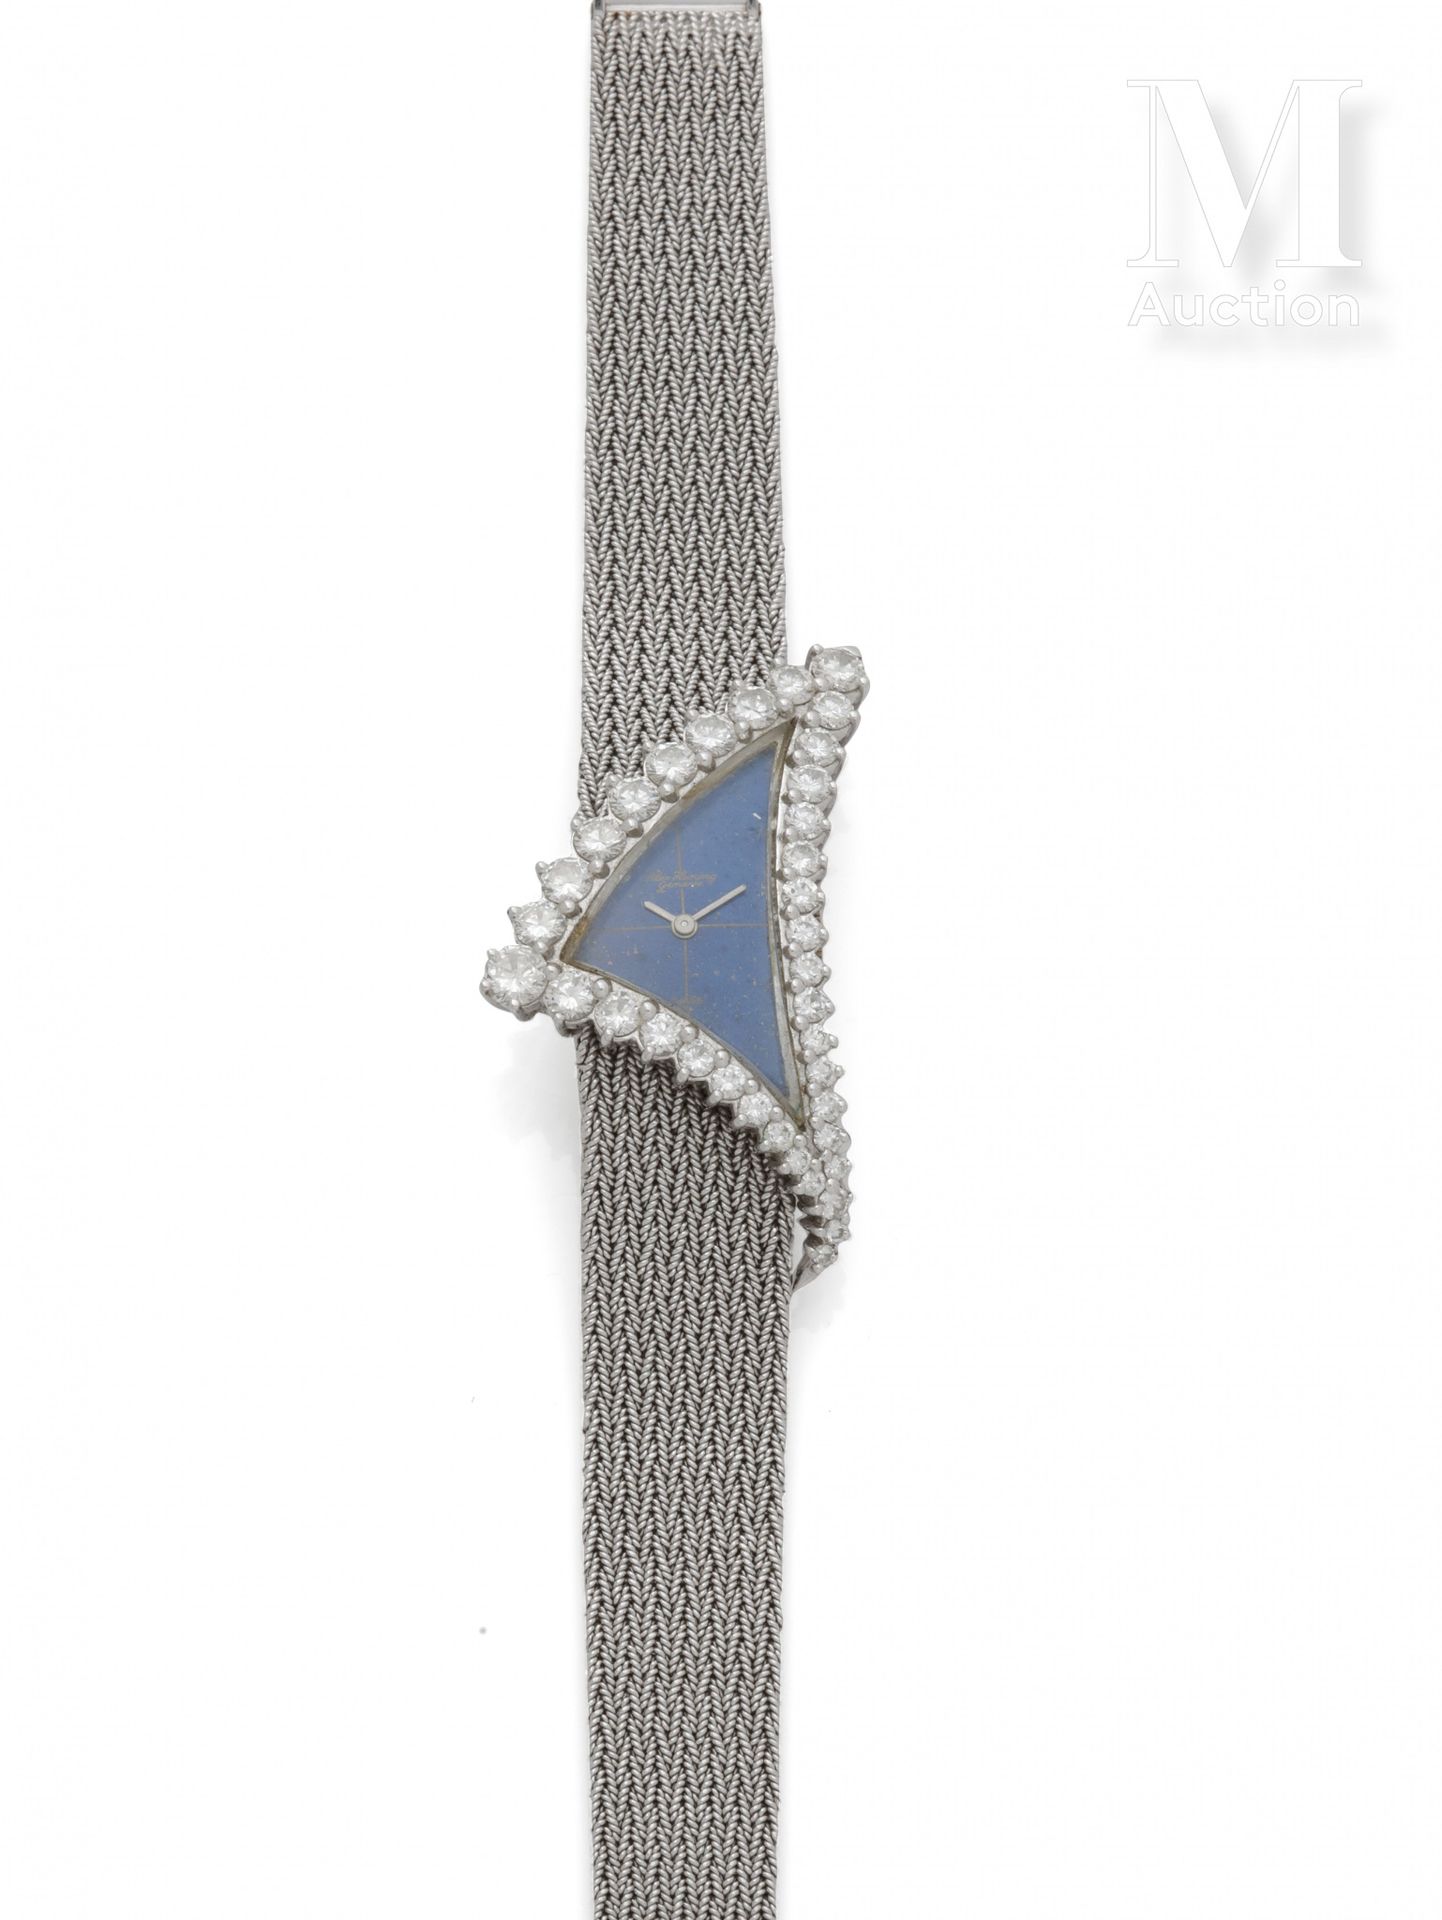 ALEX HUNING 女式手表

约1970年

镶嵌钻石的18K白金表壳

手动上链的机械机芯

尺寸：23x43mm

米兰式网纹的18K金集成手镯

毛&hellip;